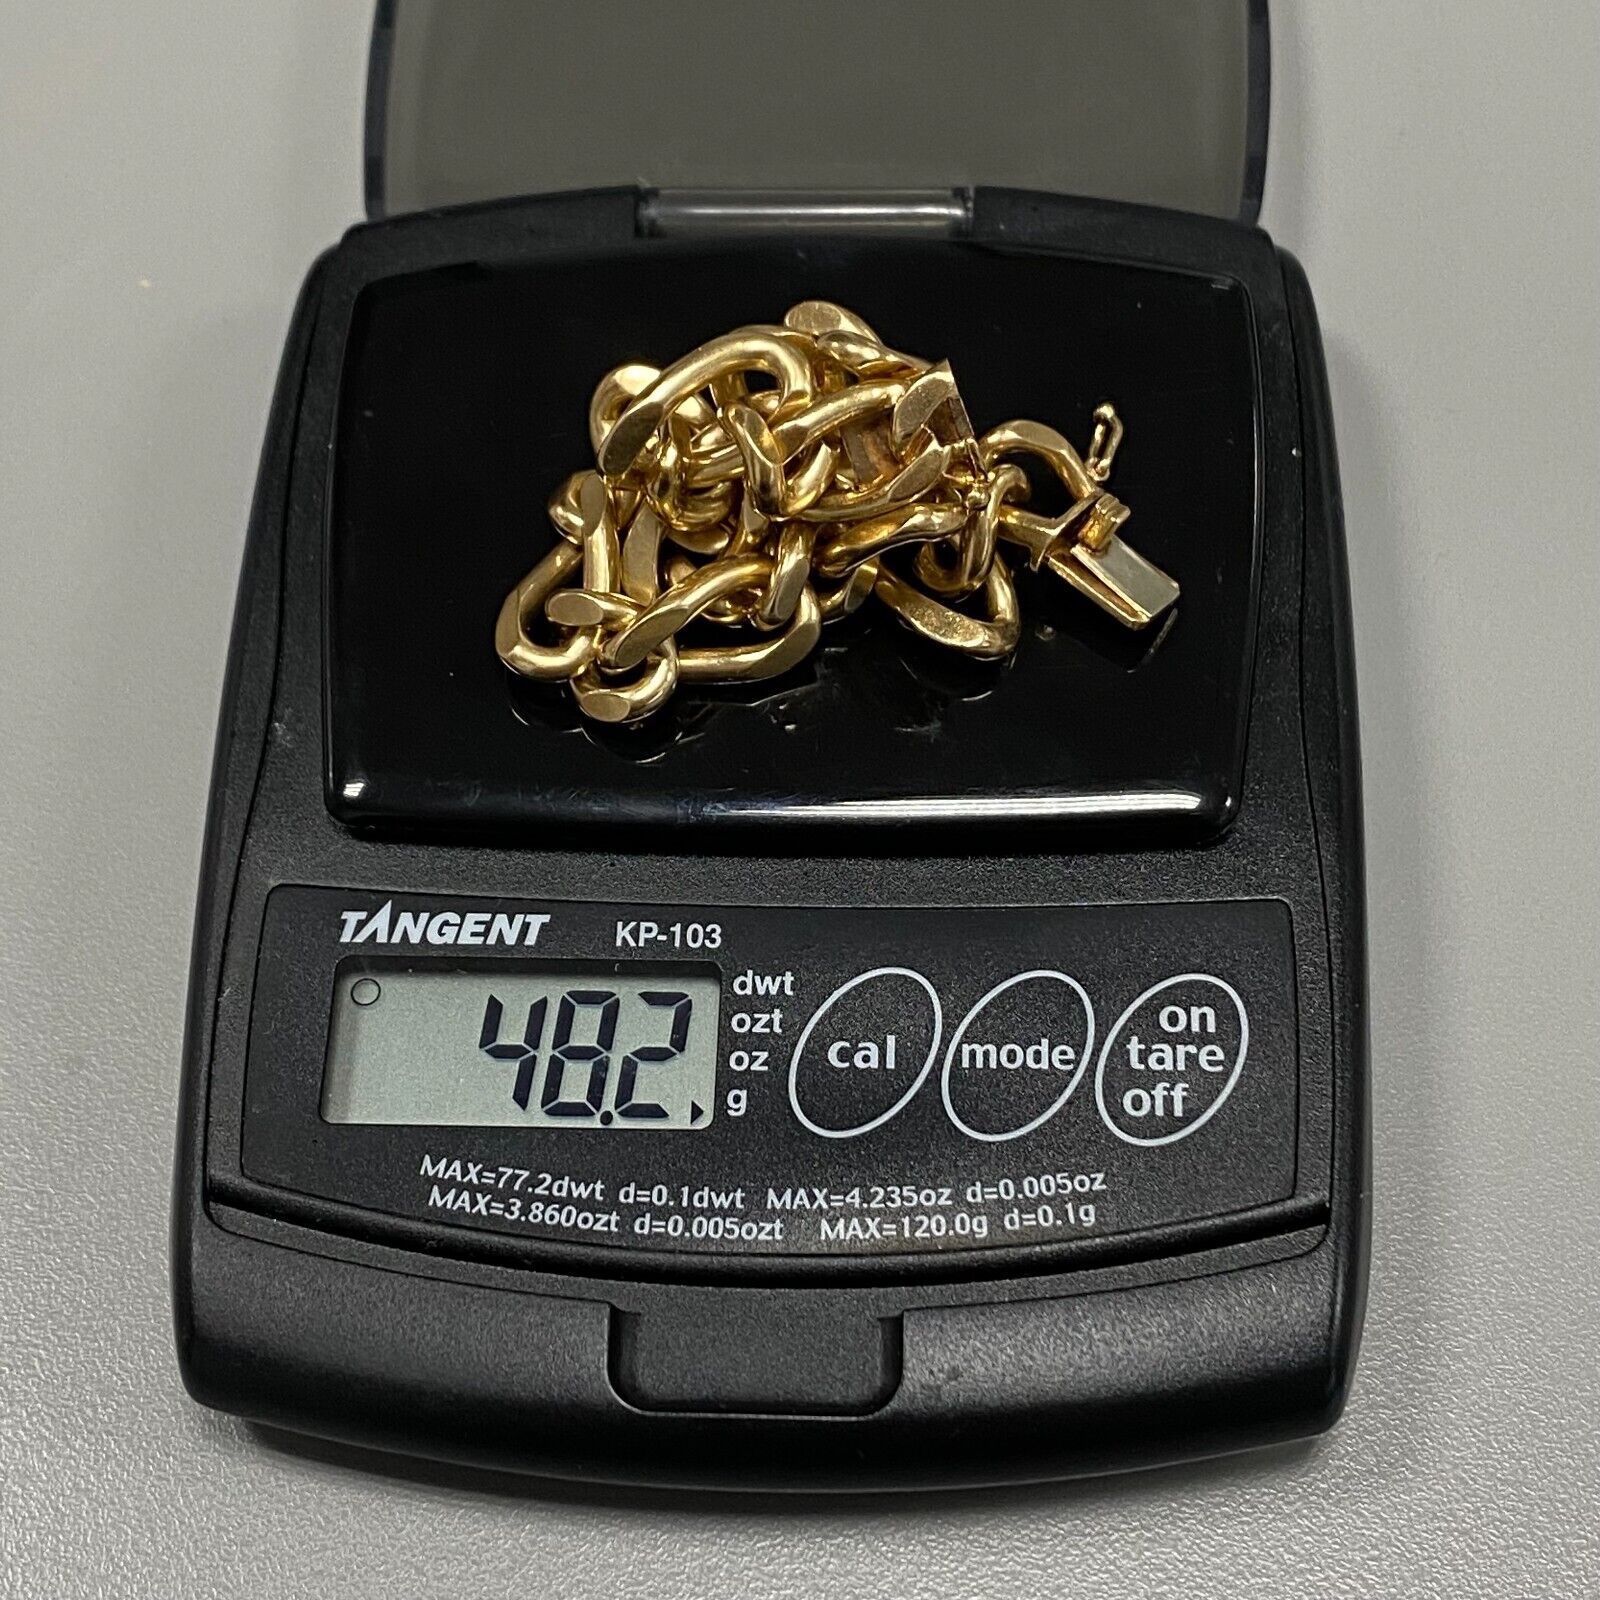 14k Yellow Solid Gold Figaro Chain Bracelet 48.2gr 7.5" 9.8mm